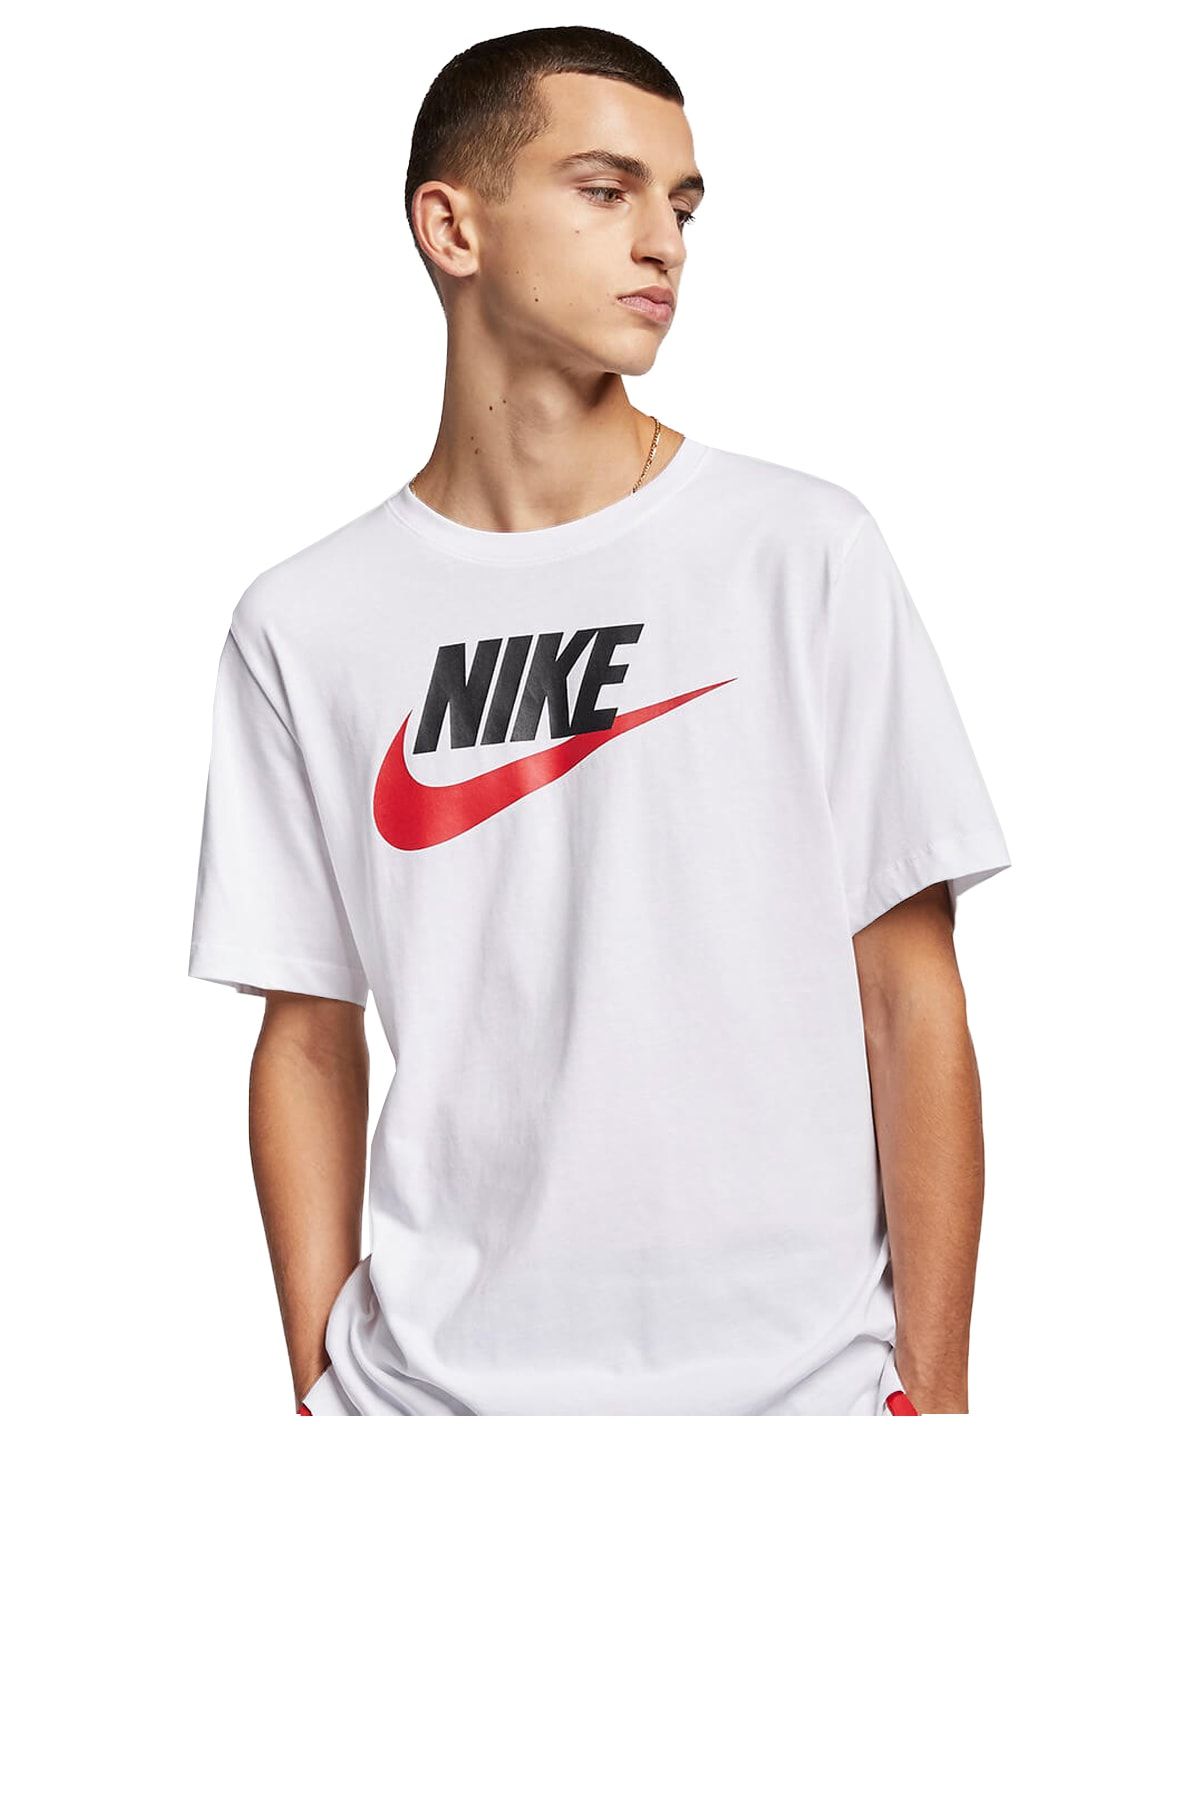 T-Shirt Nike Sportswear 100% Coton pour Homme - AR5004-101 - Blanc